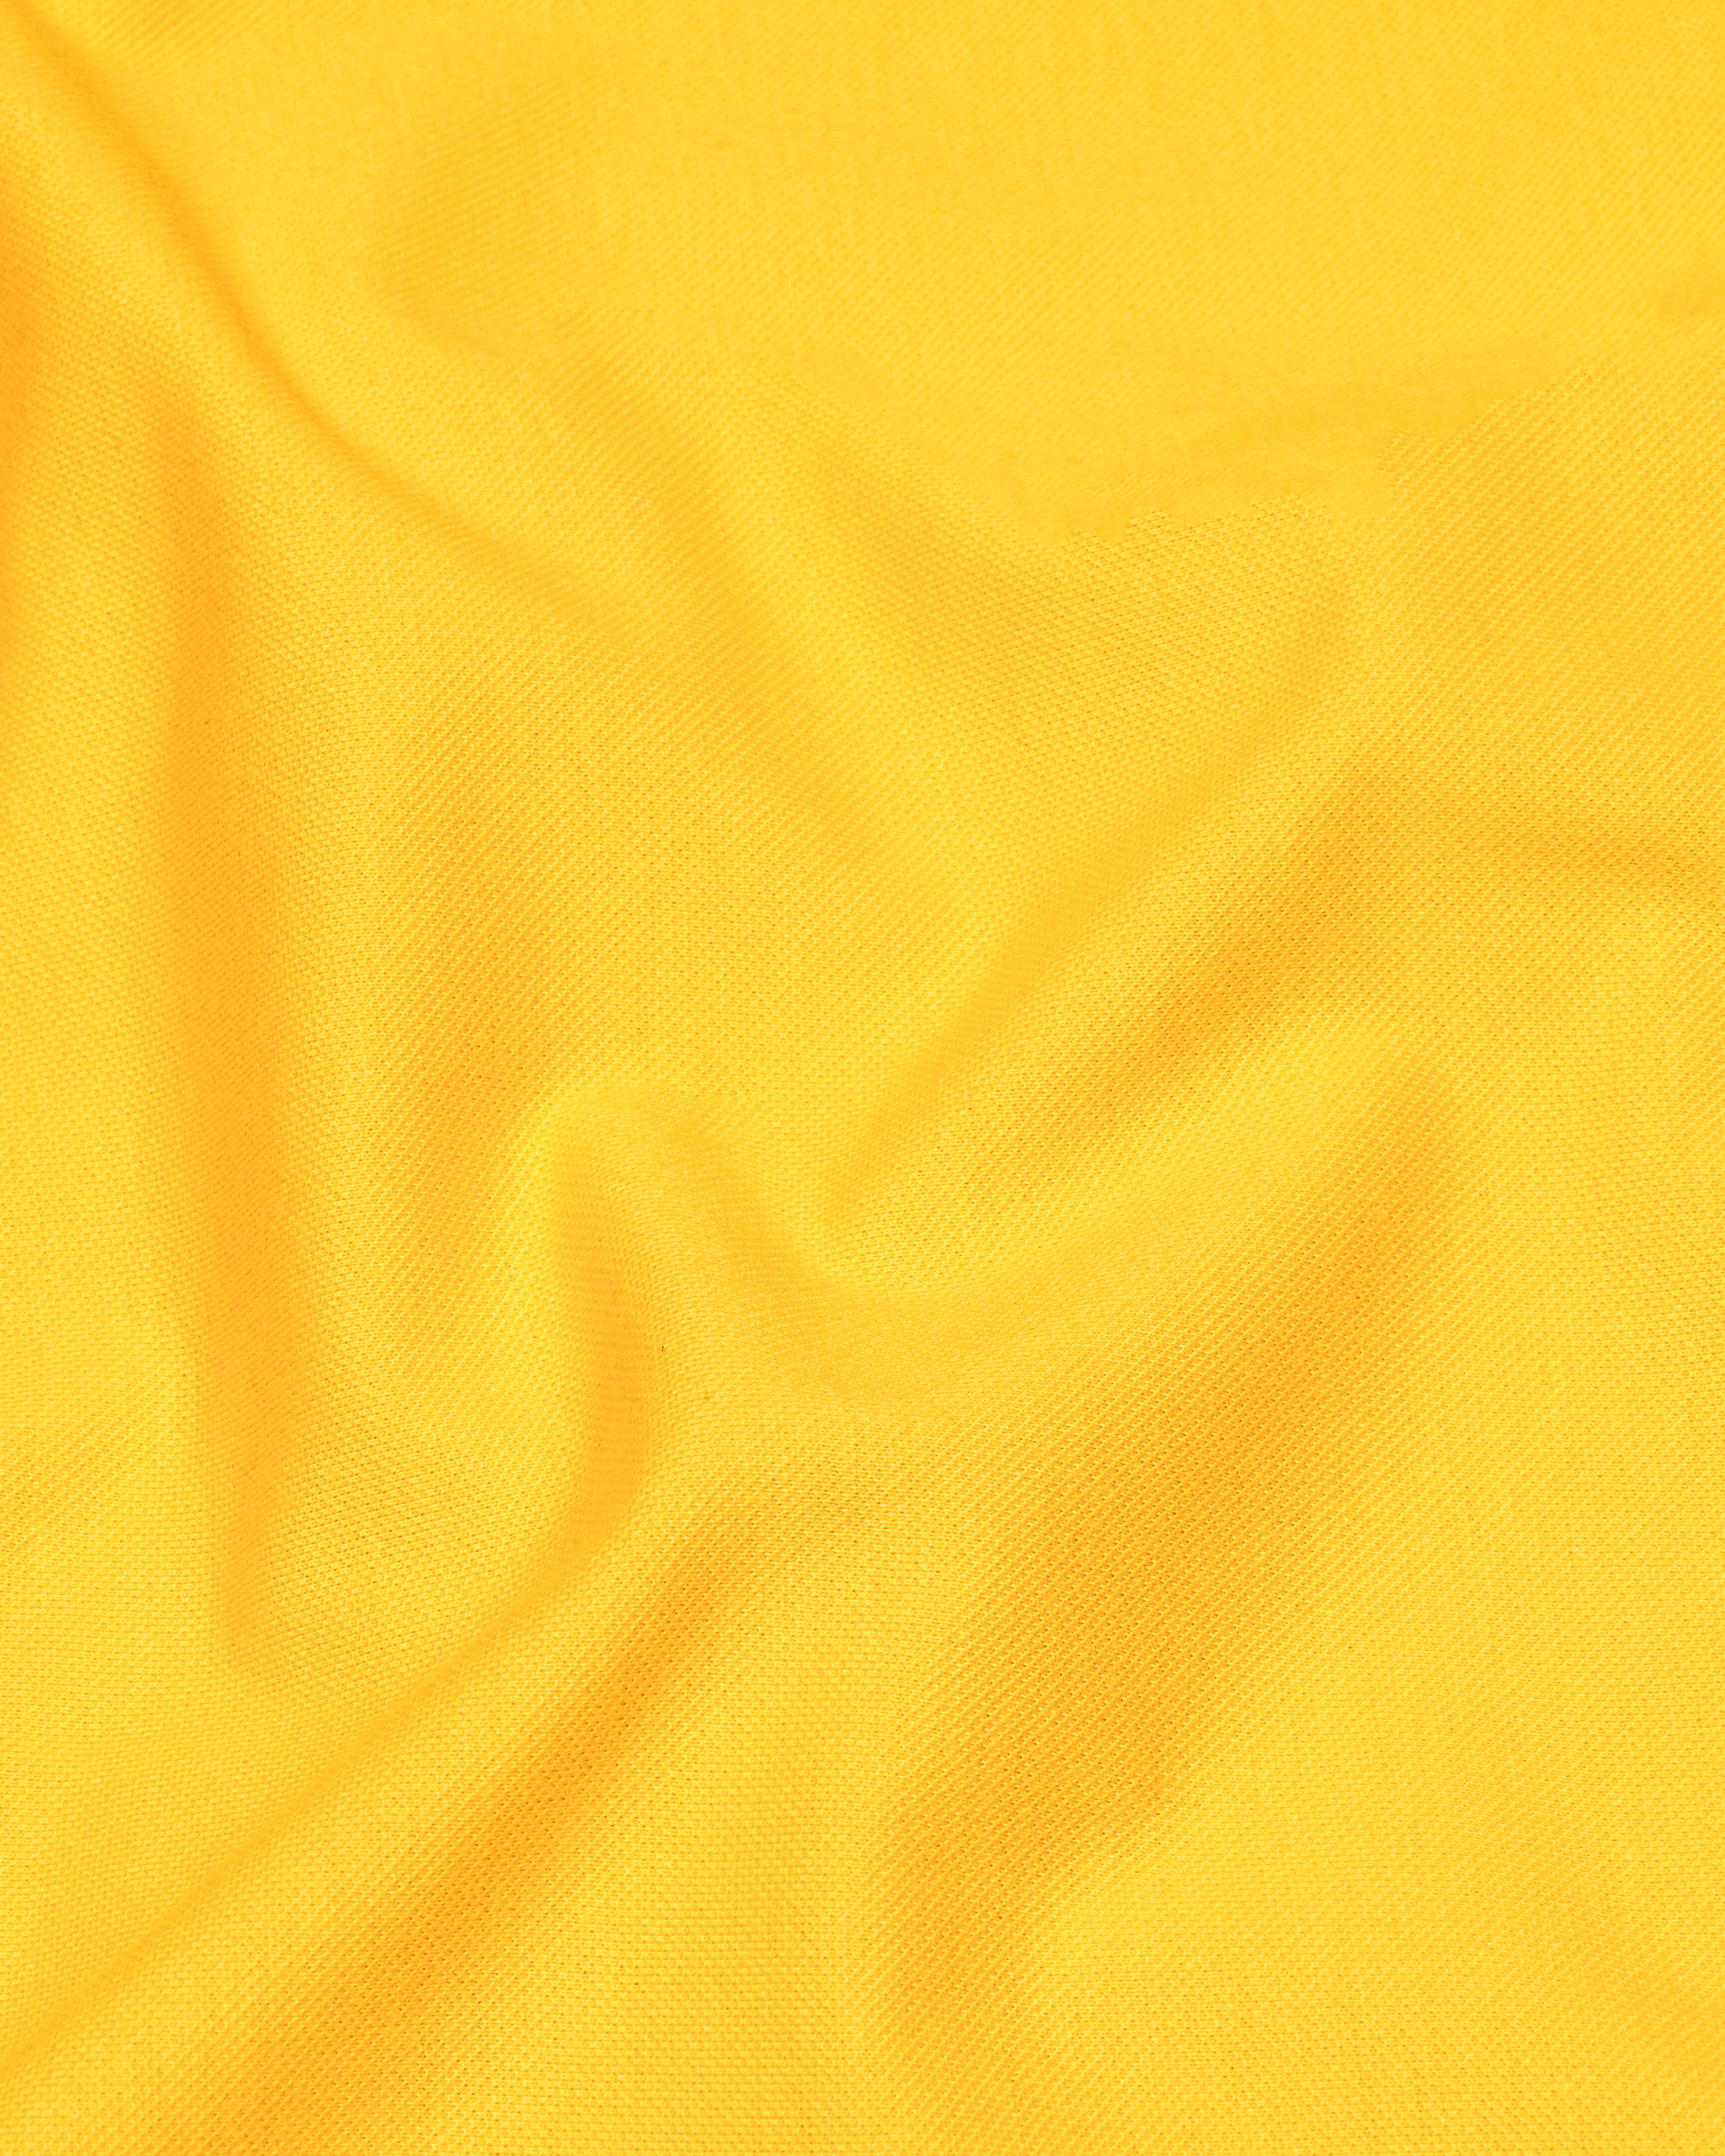 Sunglow Yellow Organic Cotton Mercerised Pique Polo